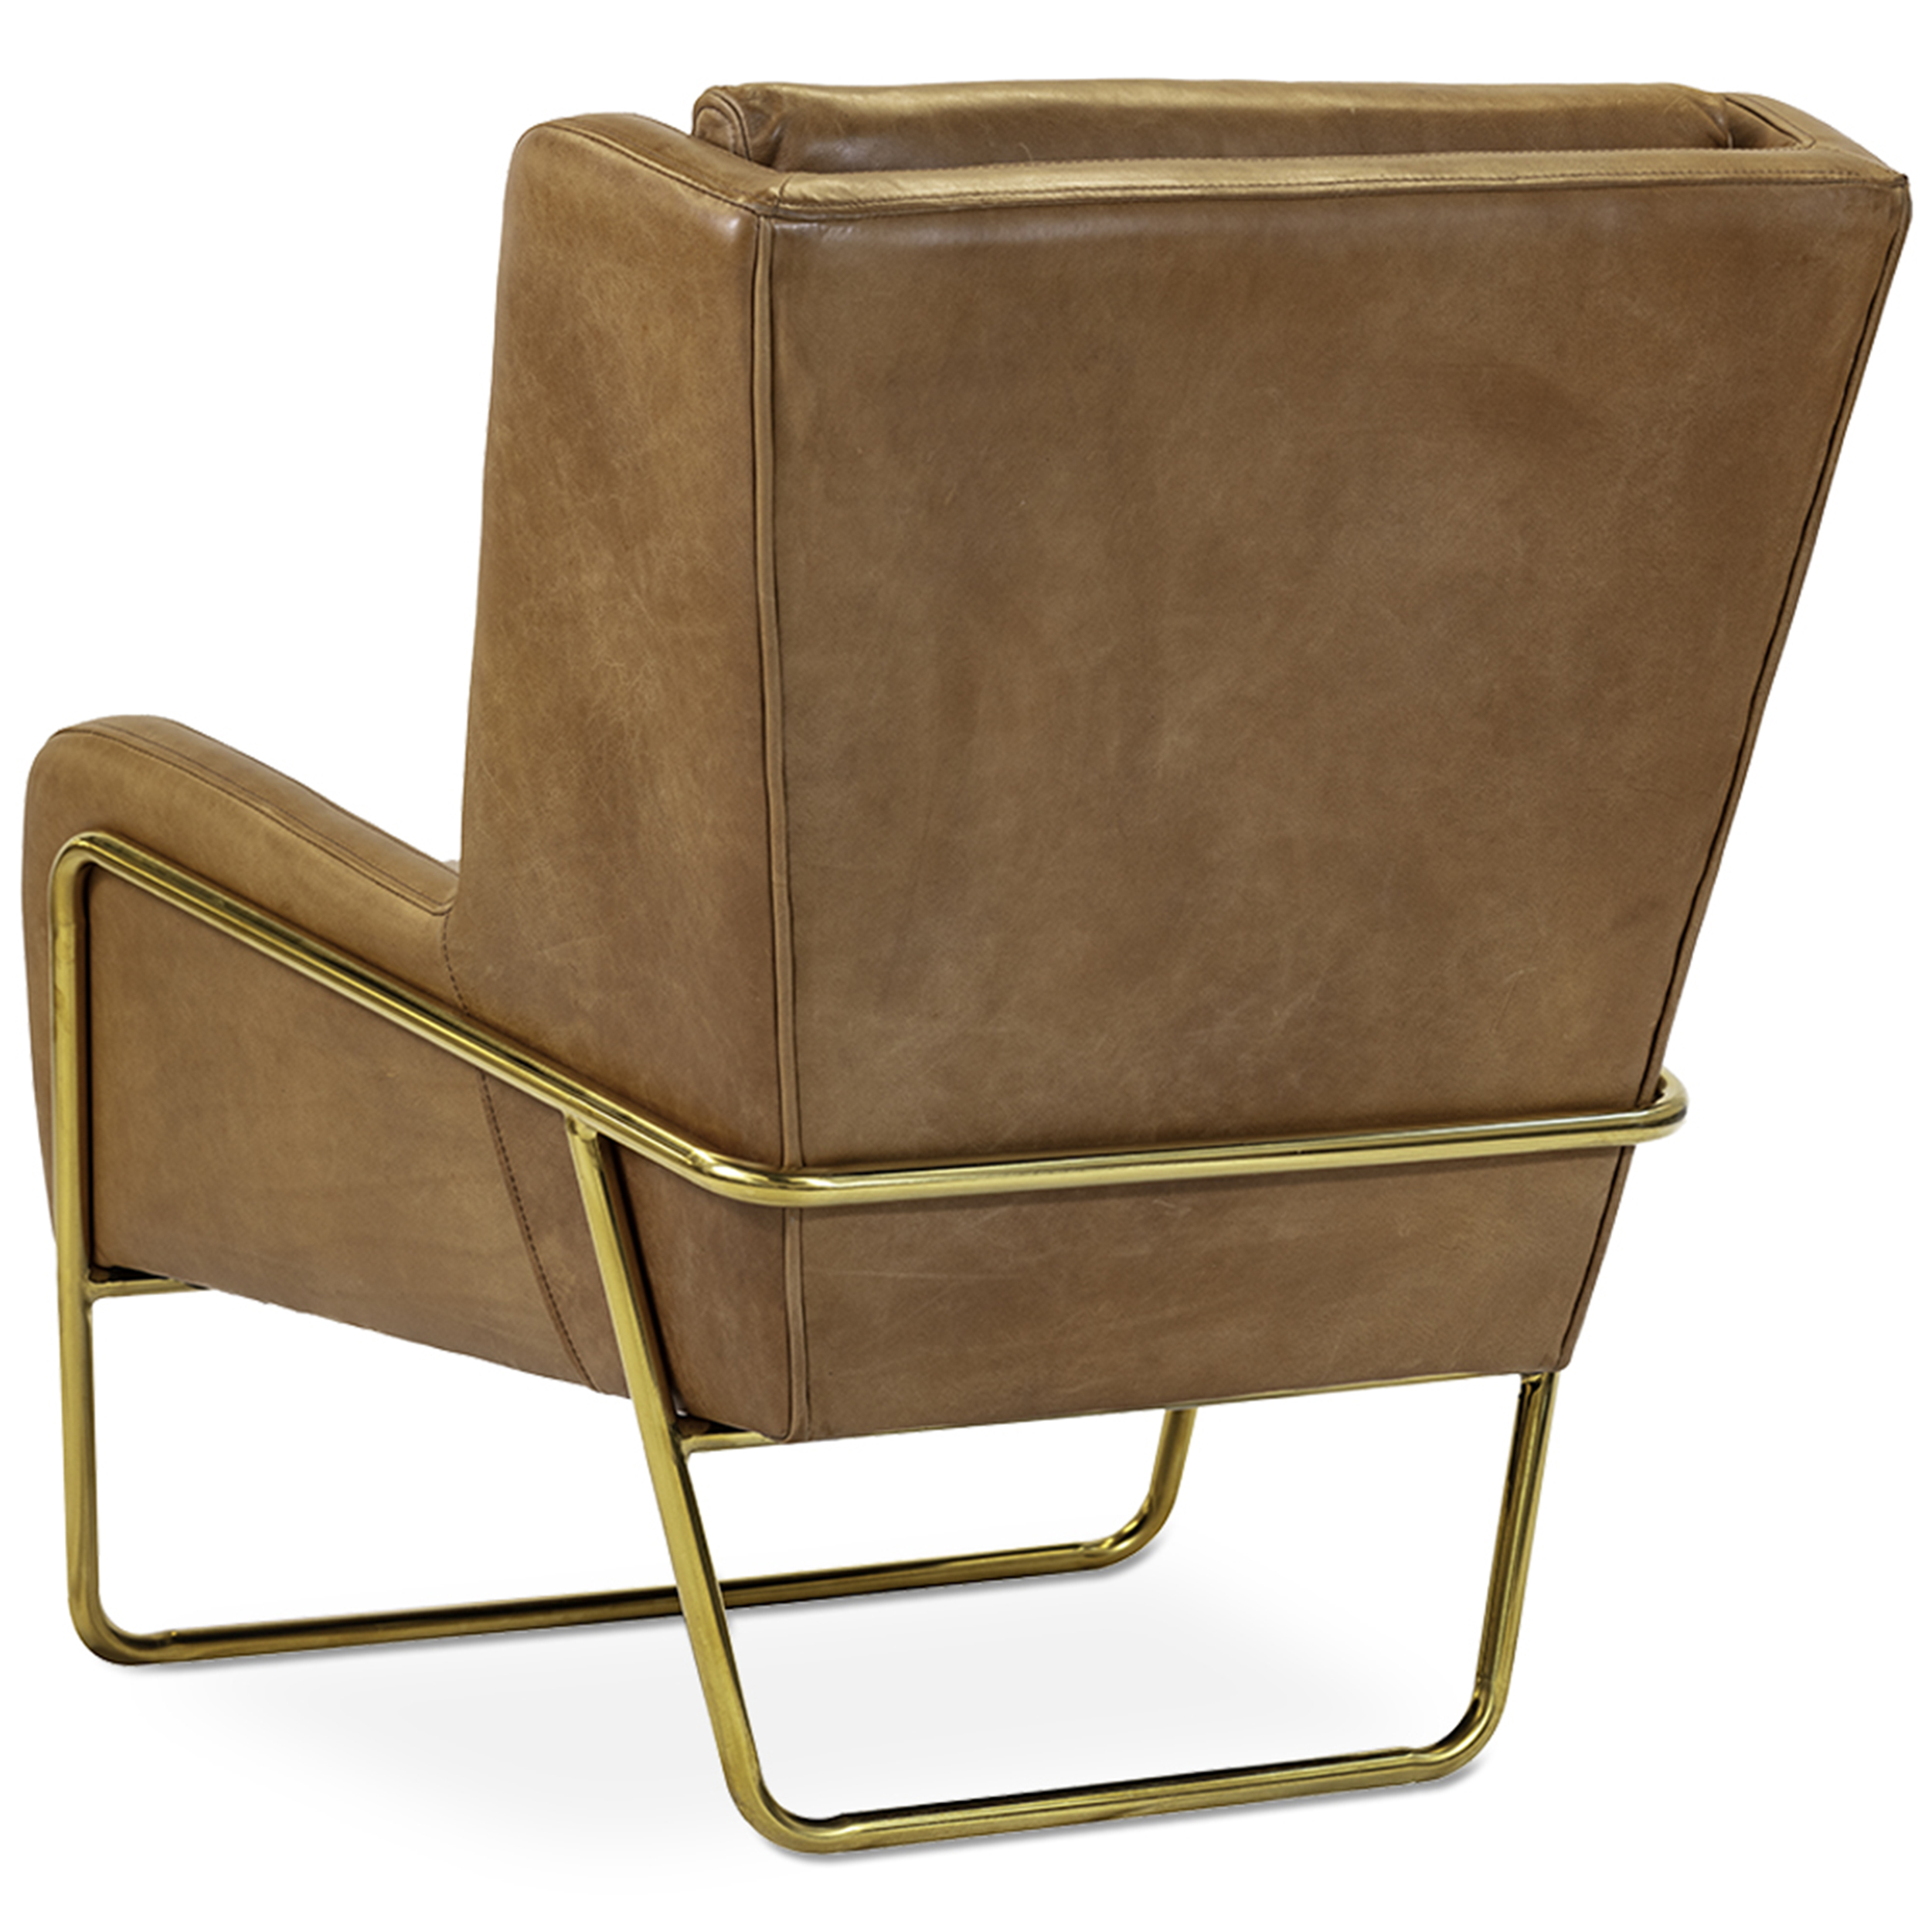 WS - London armchair - Light Brown & Brass (Back angle)